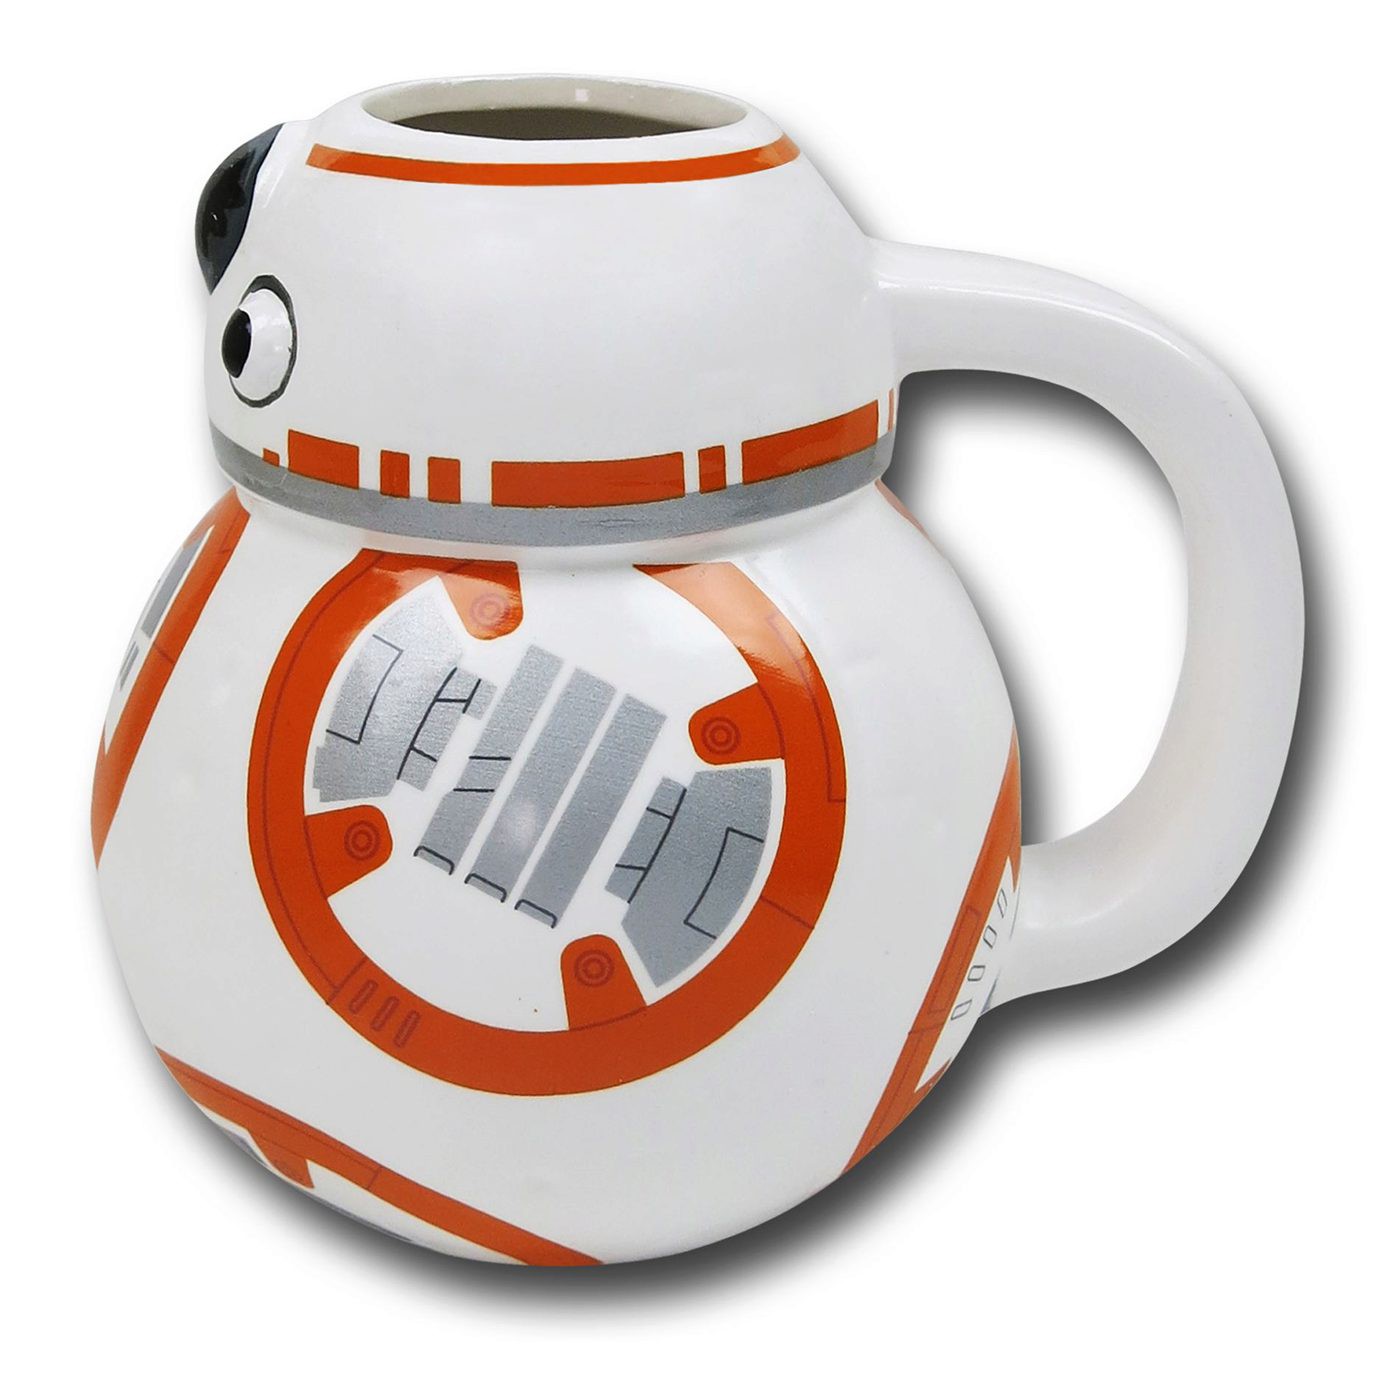 Star Wars Force Awakens BB-8 Character Mug